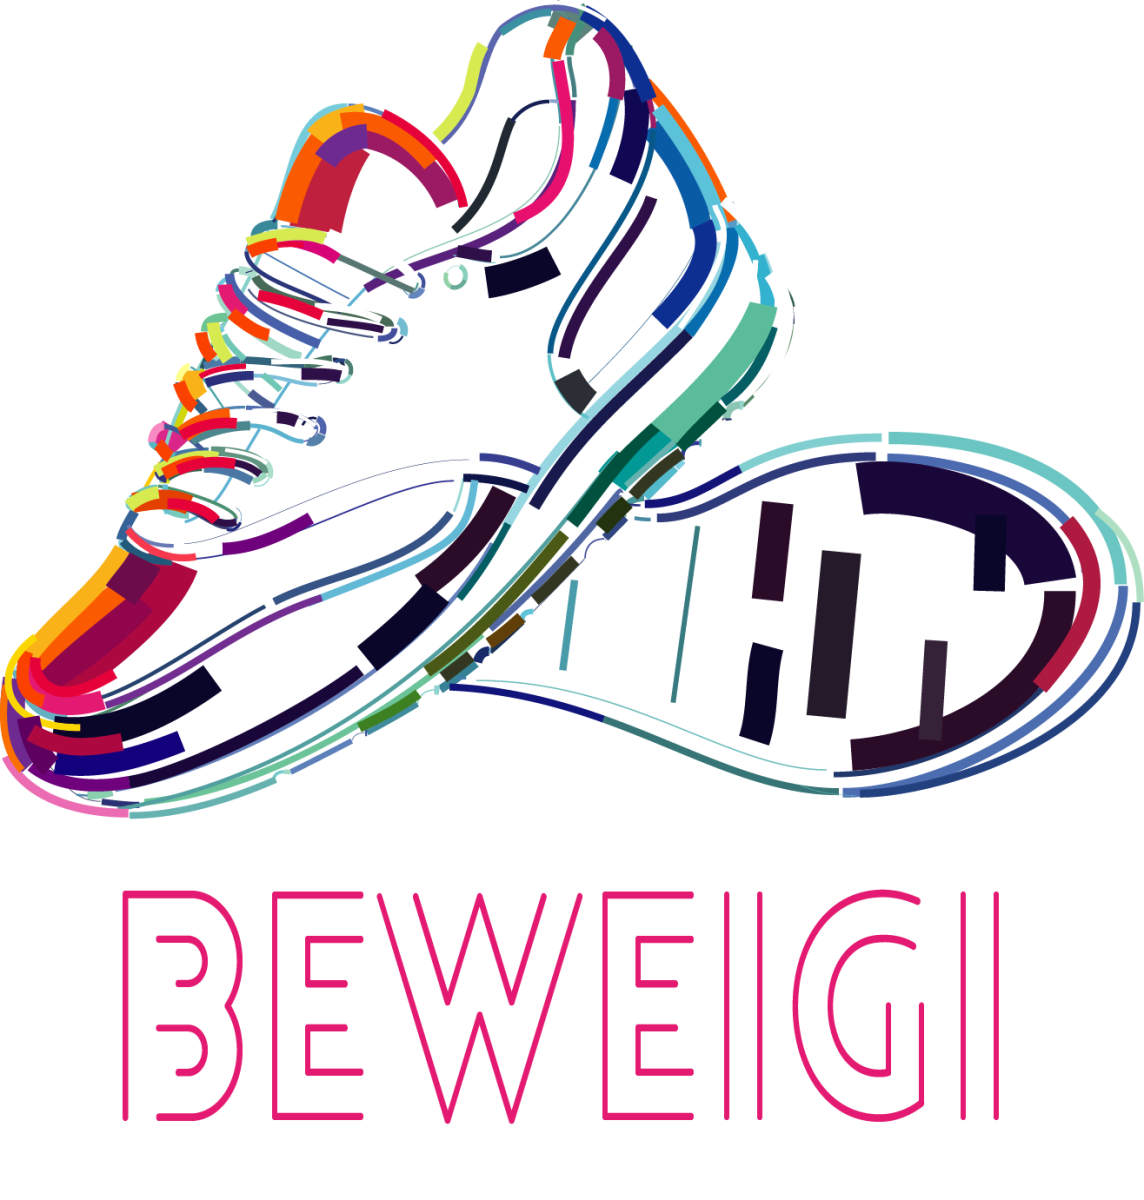 logo-beweigi1682689921